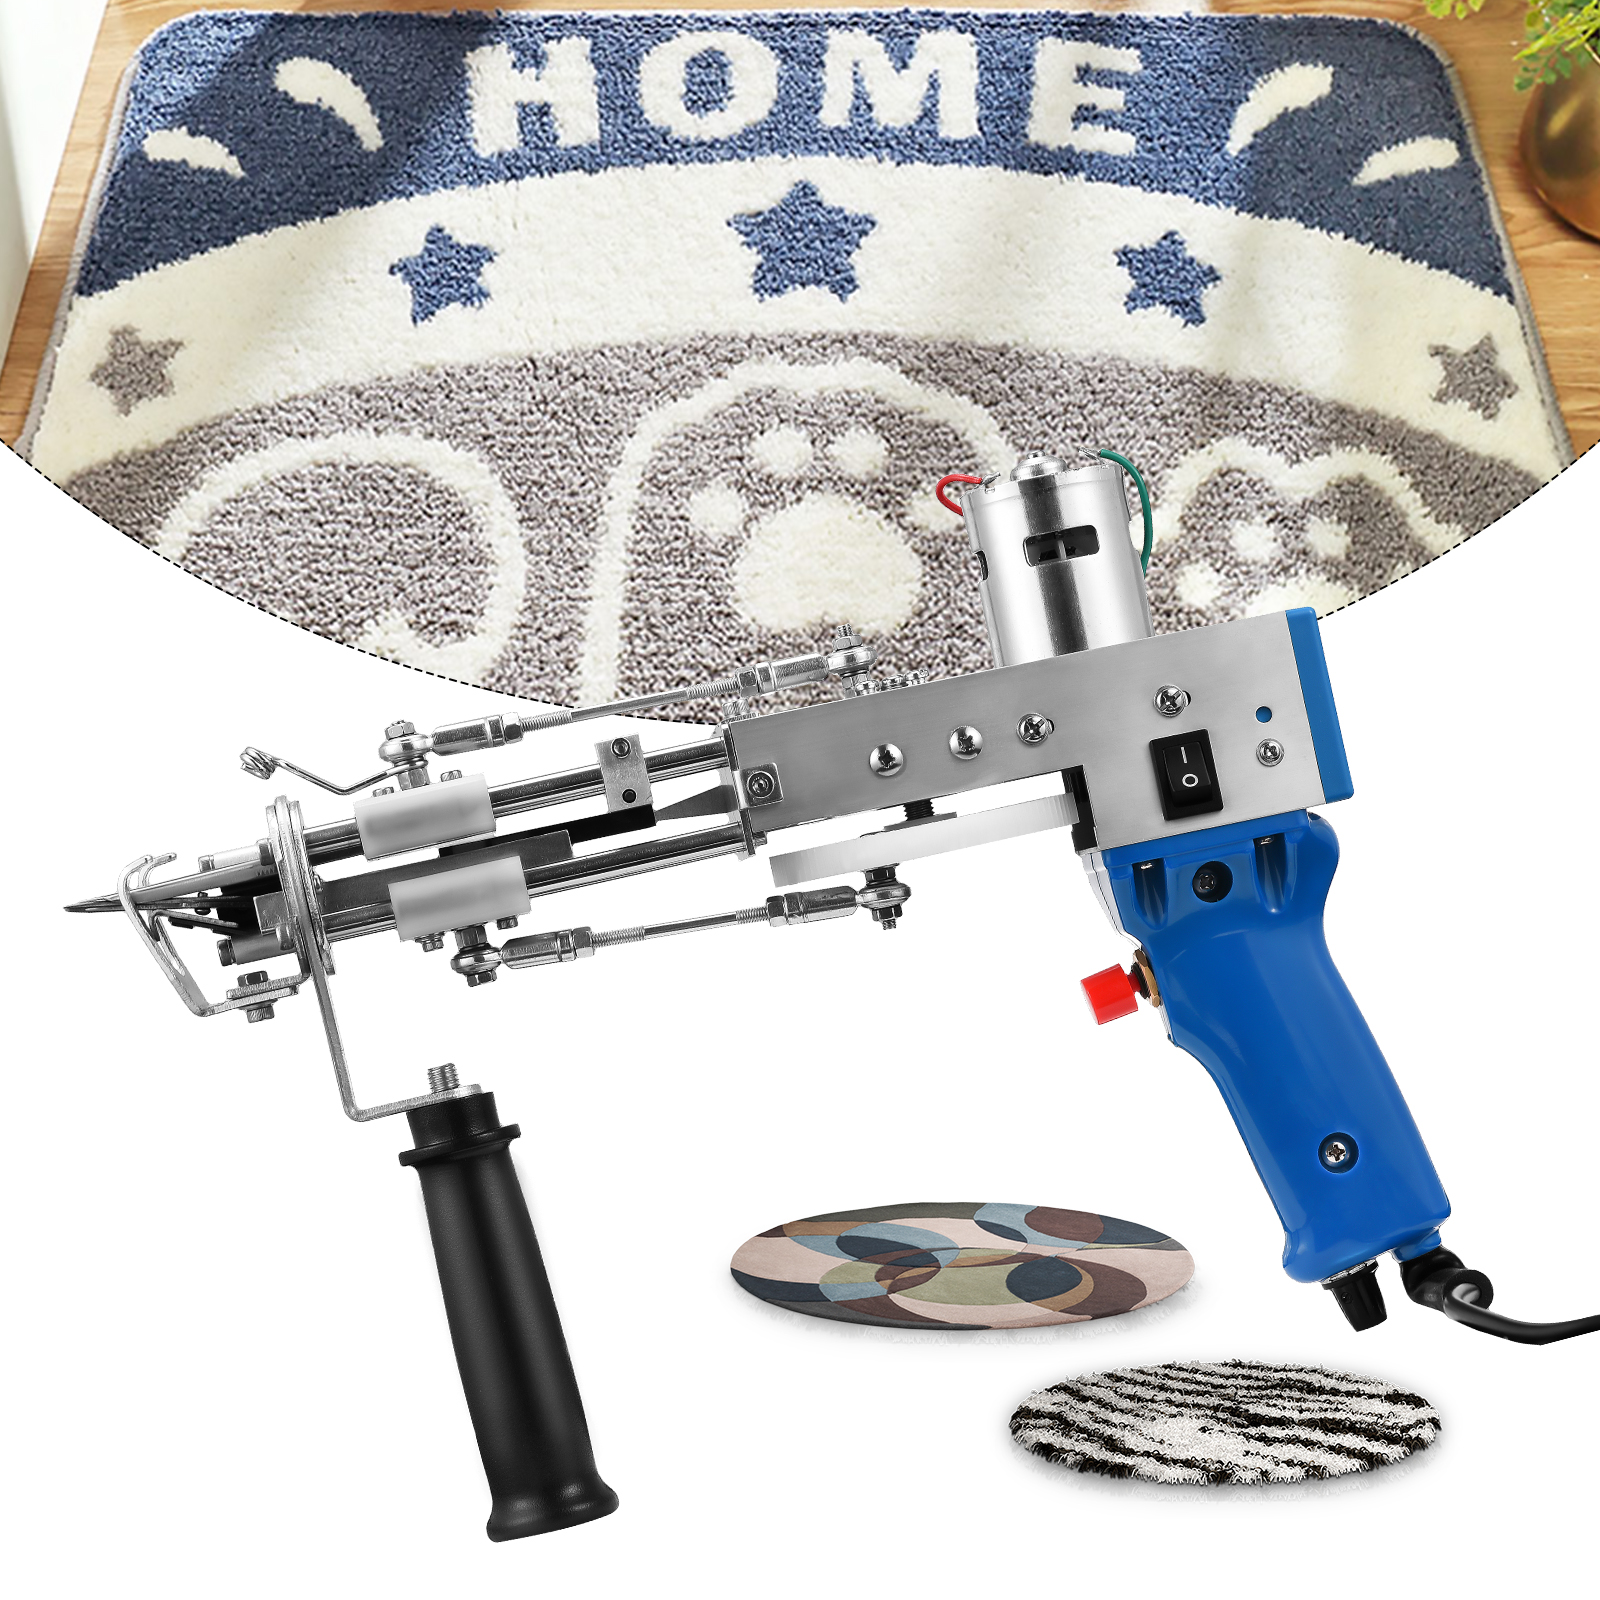 2 In 1 Tufting Gun Can Do Cut Pile And Loop Pile Electric Carpet Rug Guns, Carpet Weaving Knitting Machine With 5-40 Stitches resin heat gun